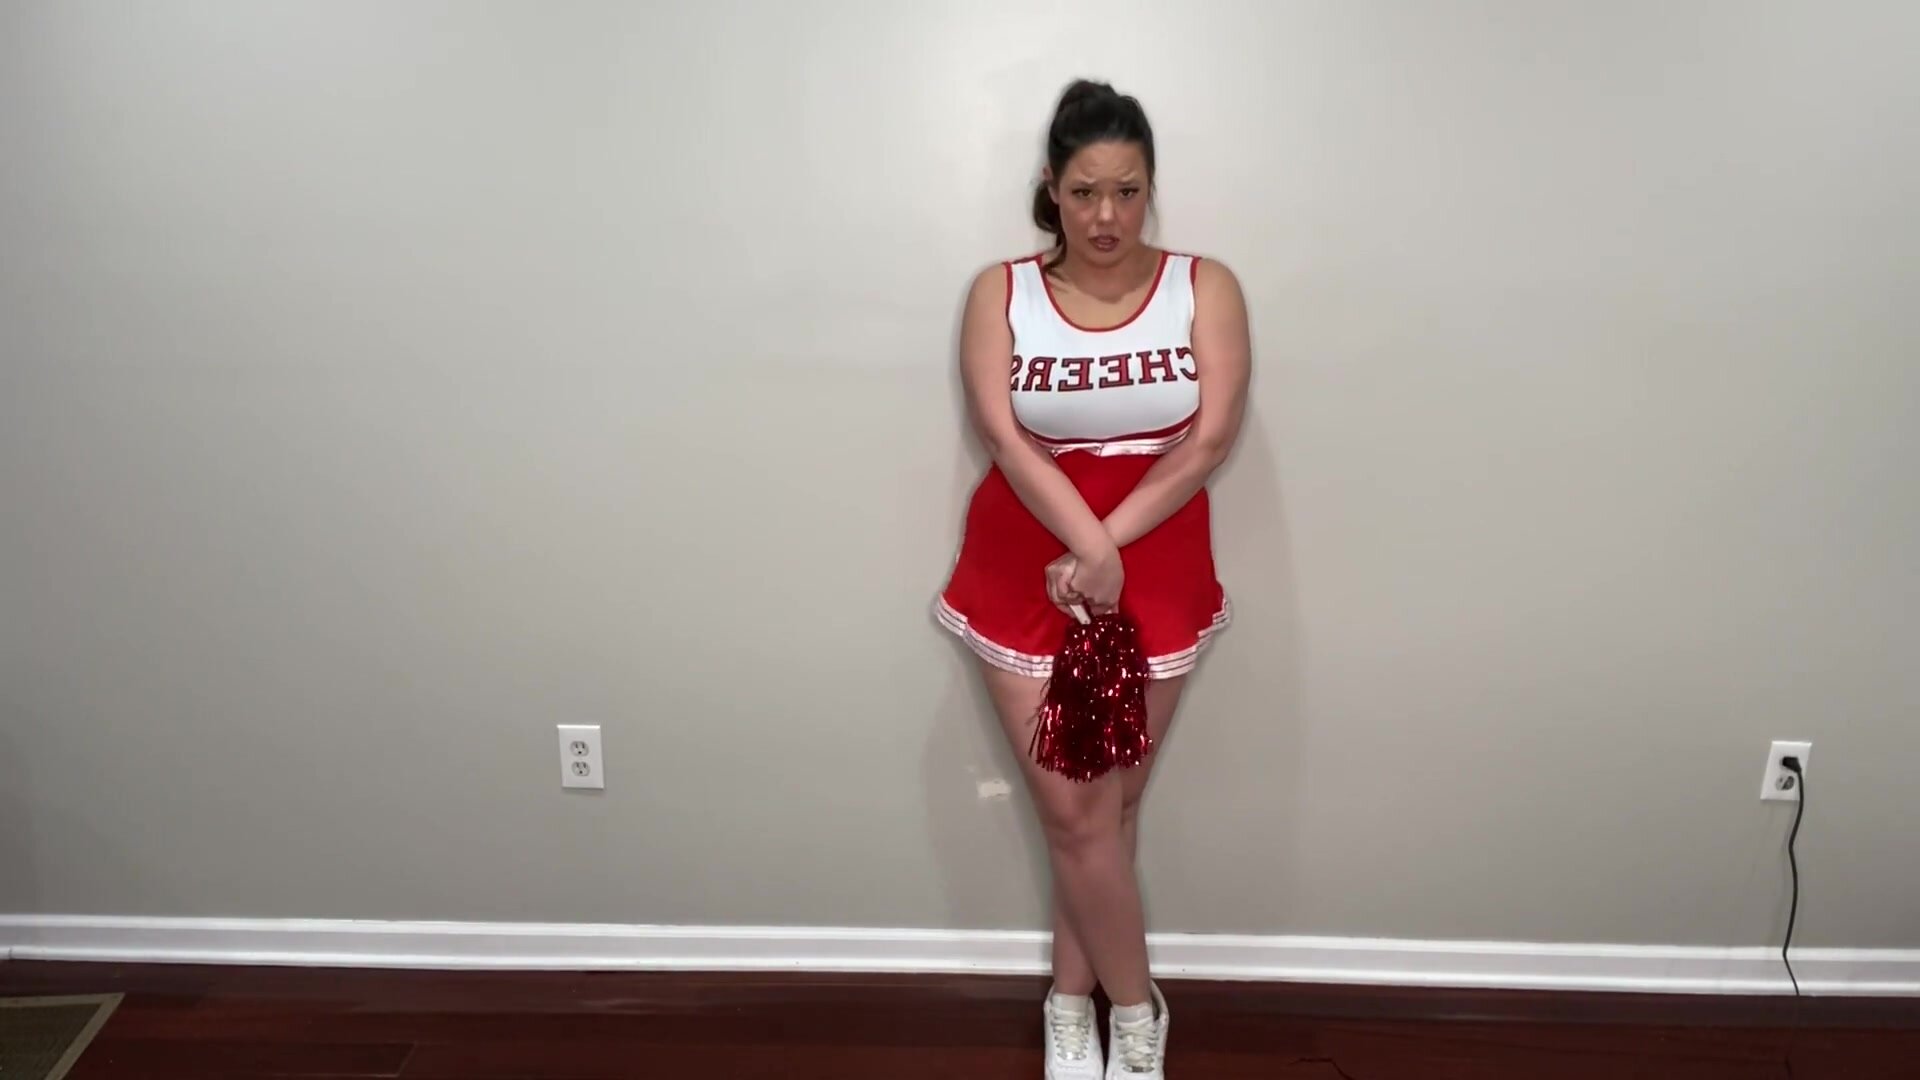 Cheerleader has to photo